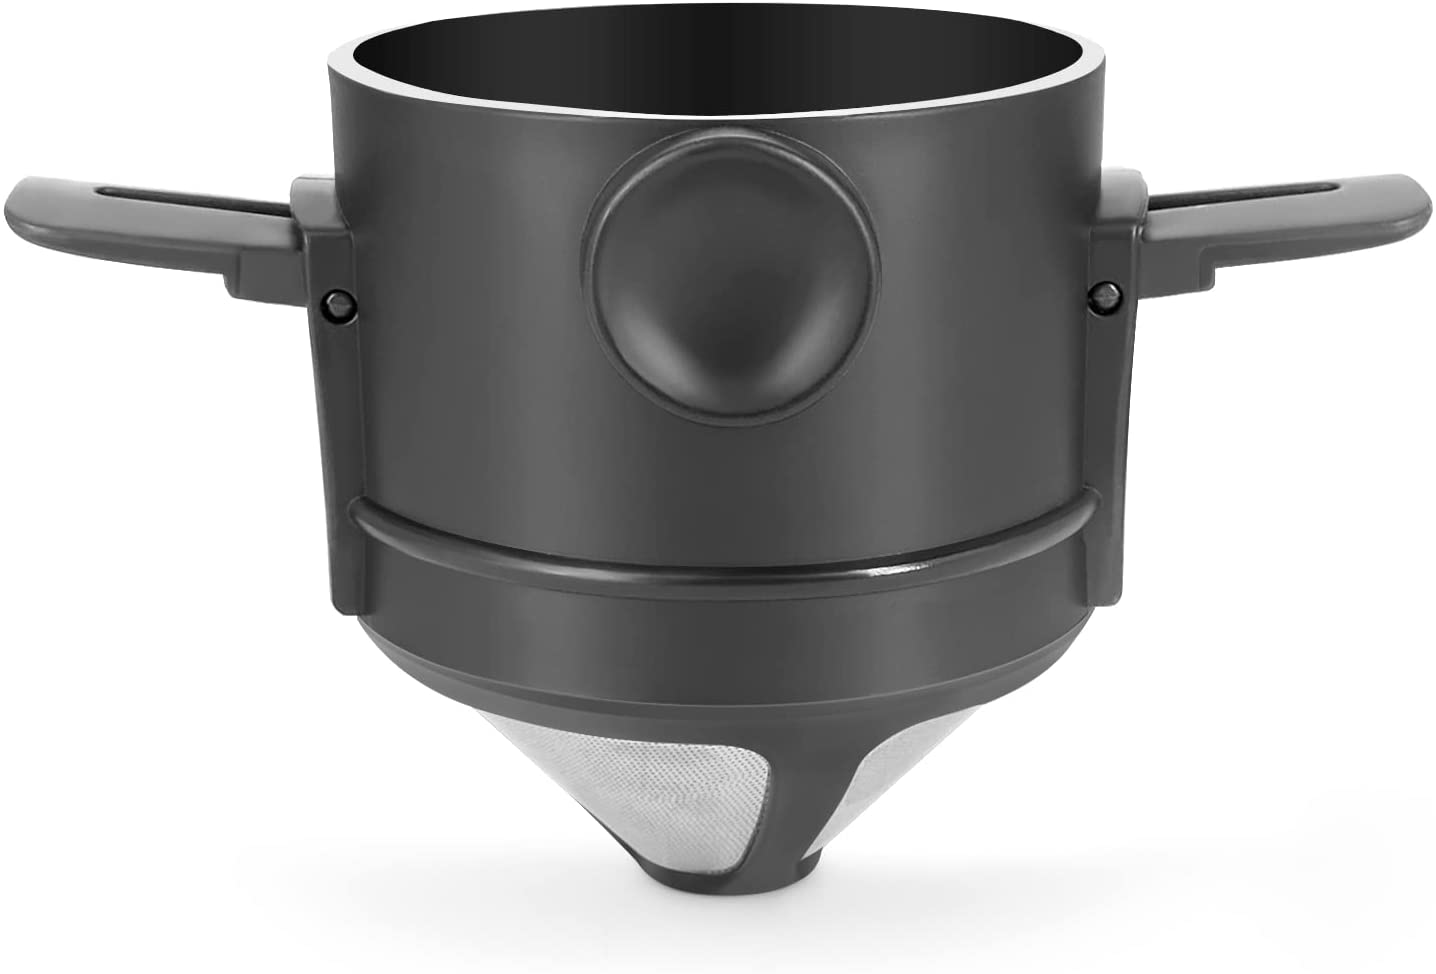 Sunydog Foldable Portable Hand Brew Coffee Filter Cone Coffee Drip Cone Tea